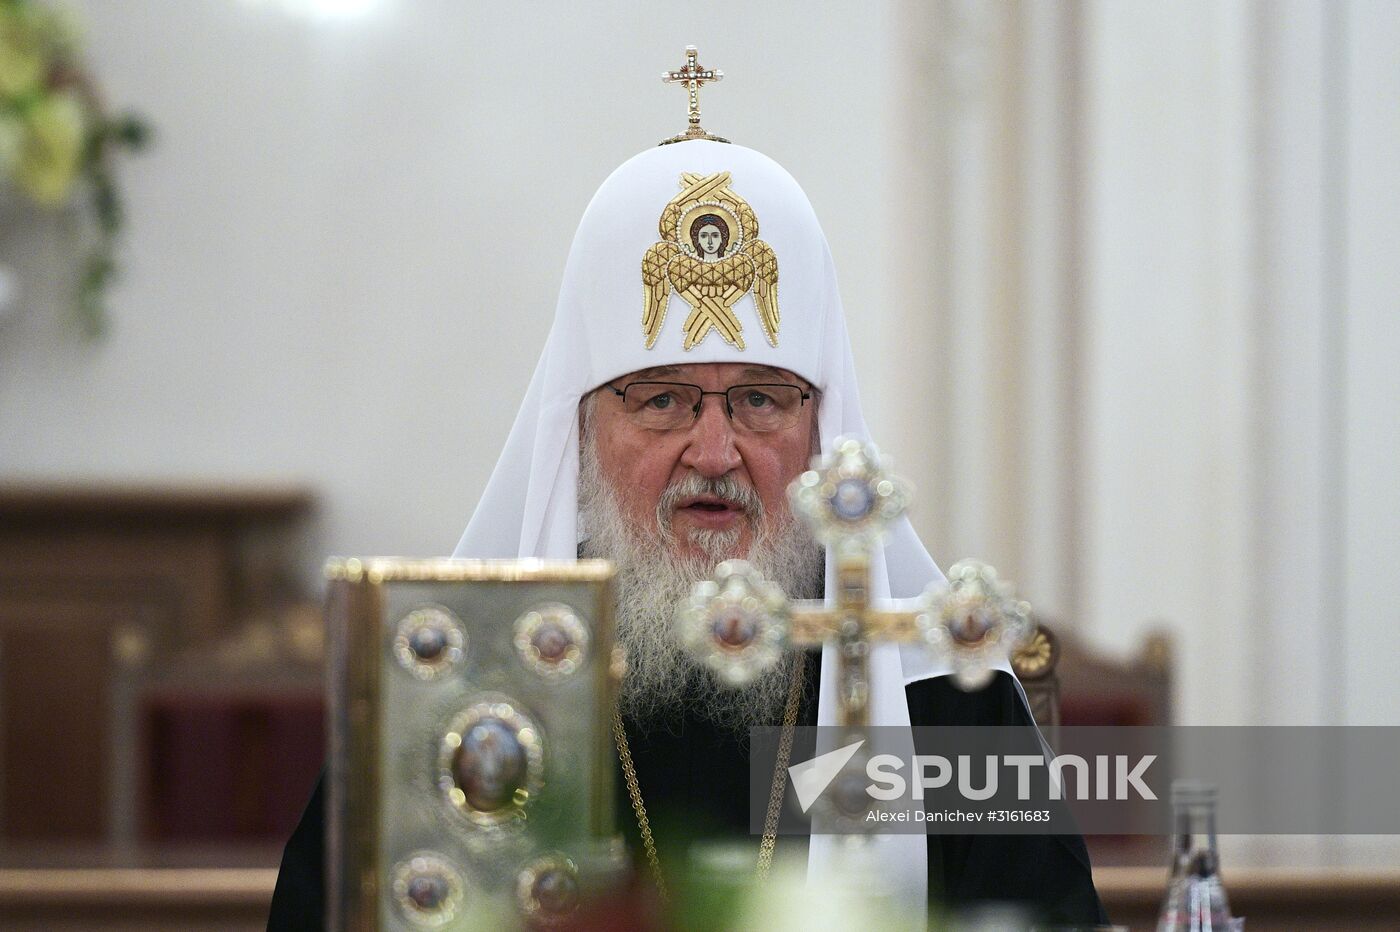 Meeting of Holy Synod in St. Petersburg